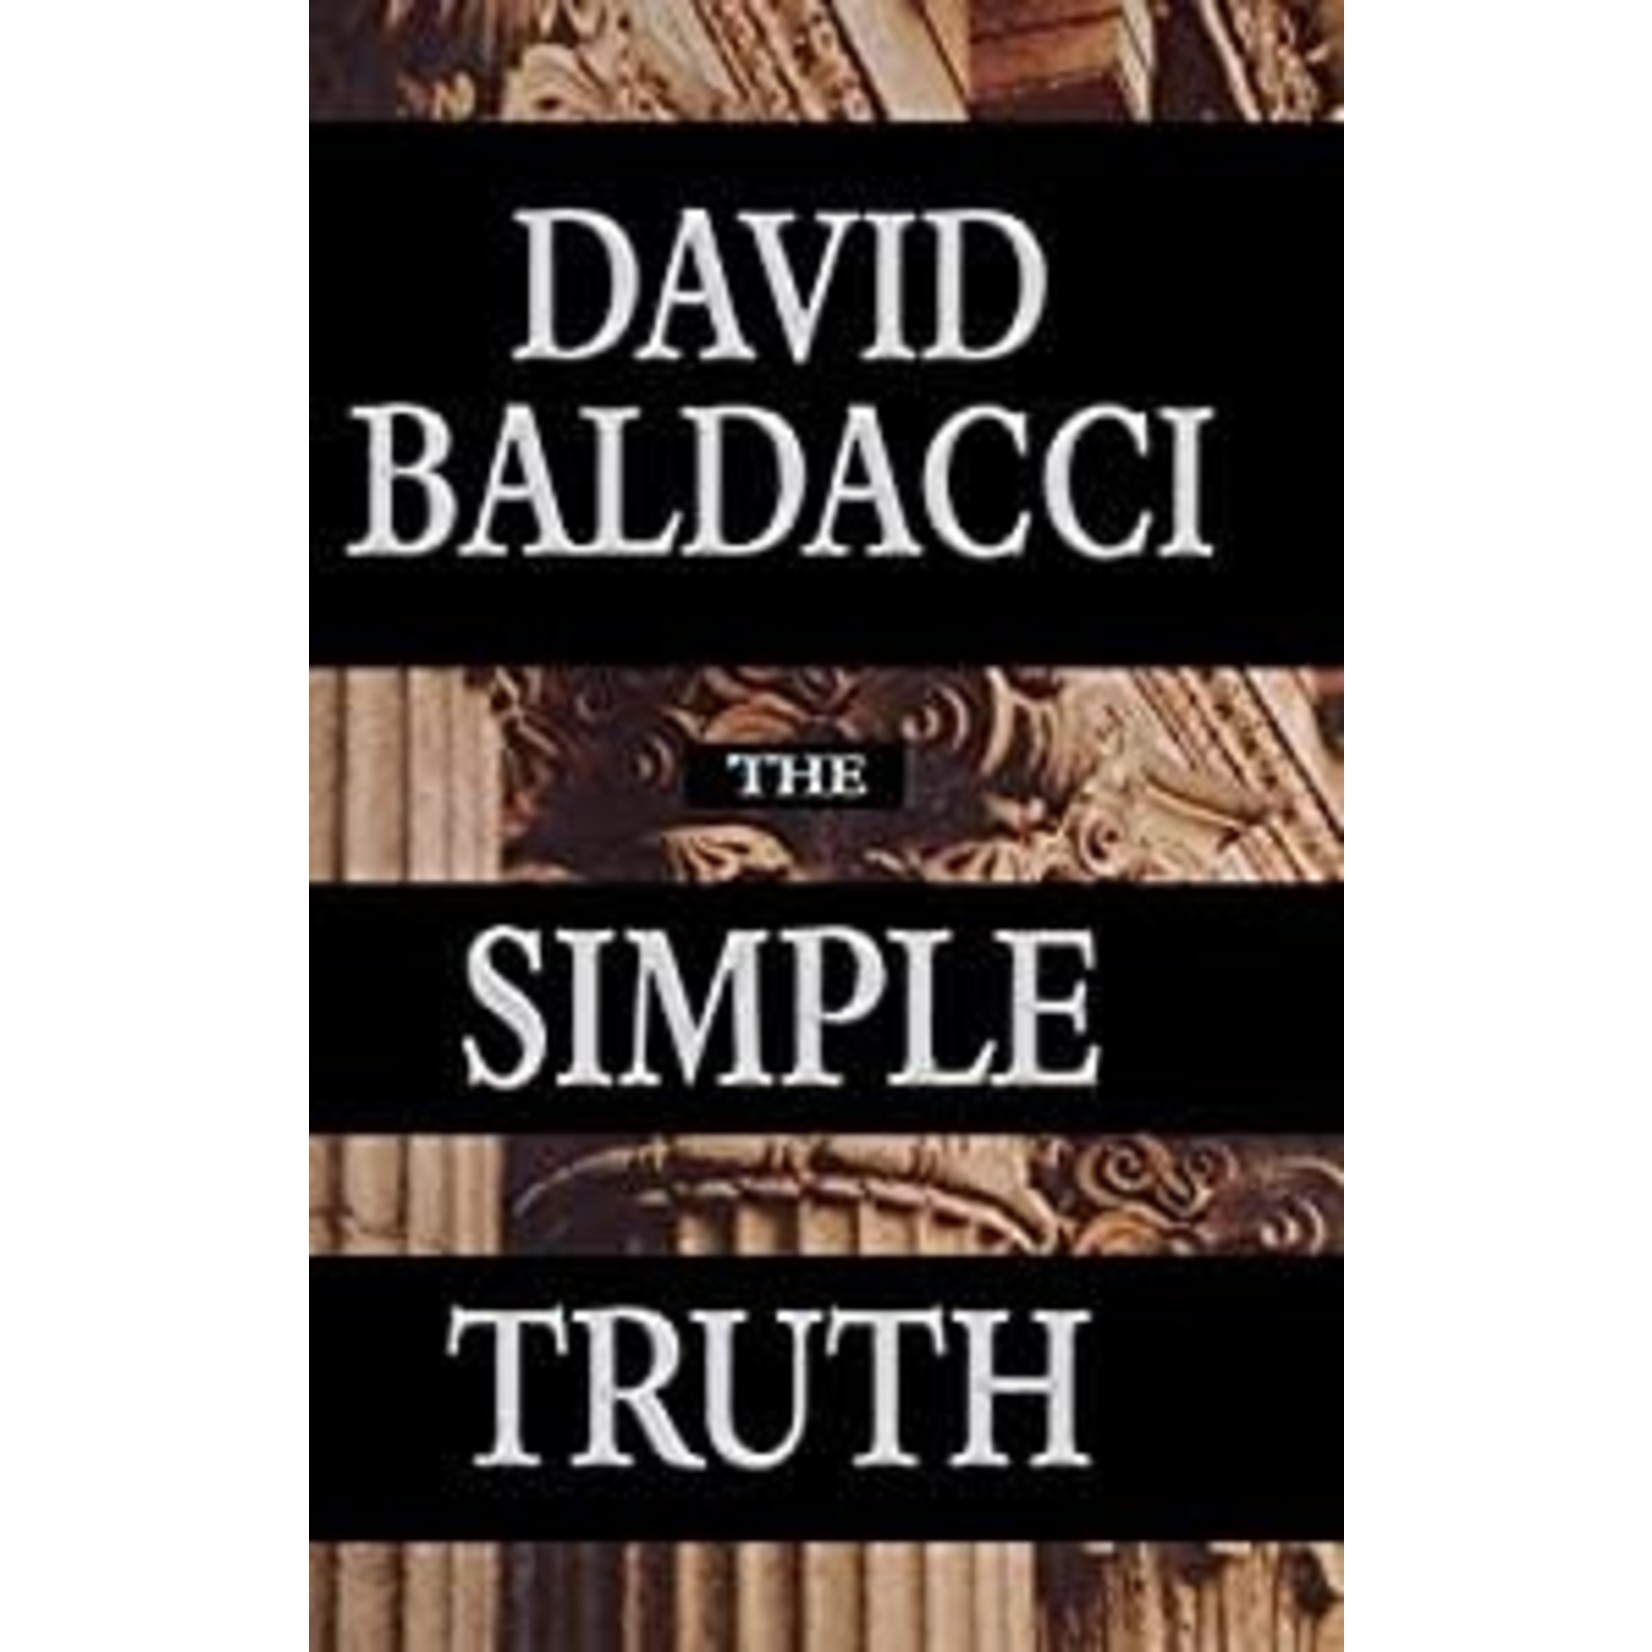 Baldacci, David Baldacci, David - The Simple Truth (Hardcover)